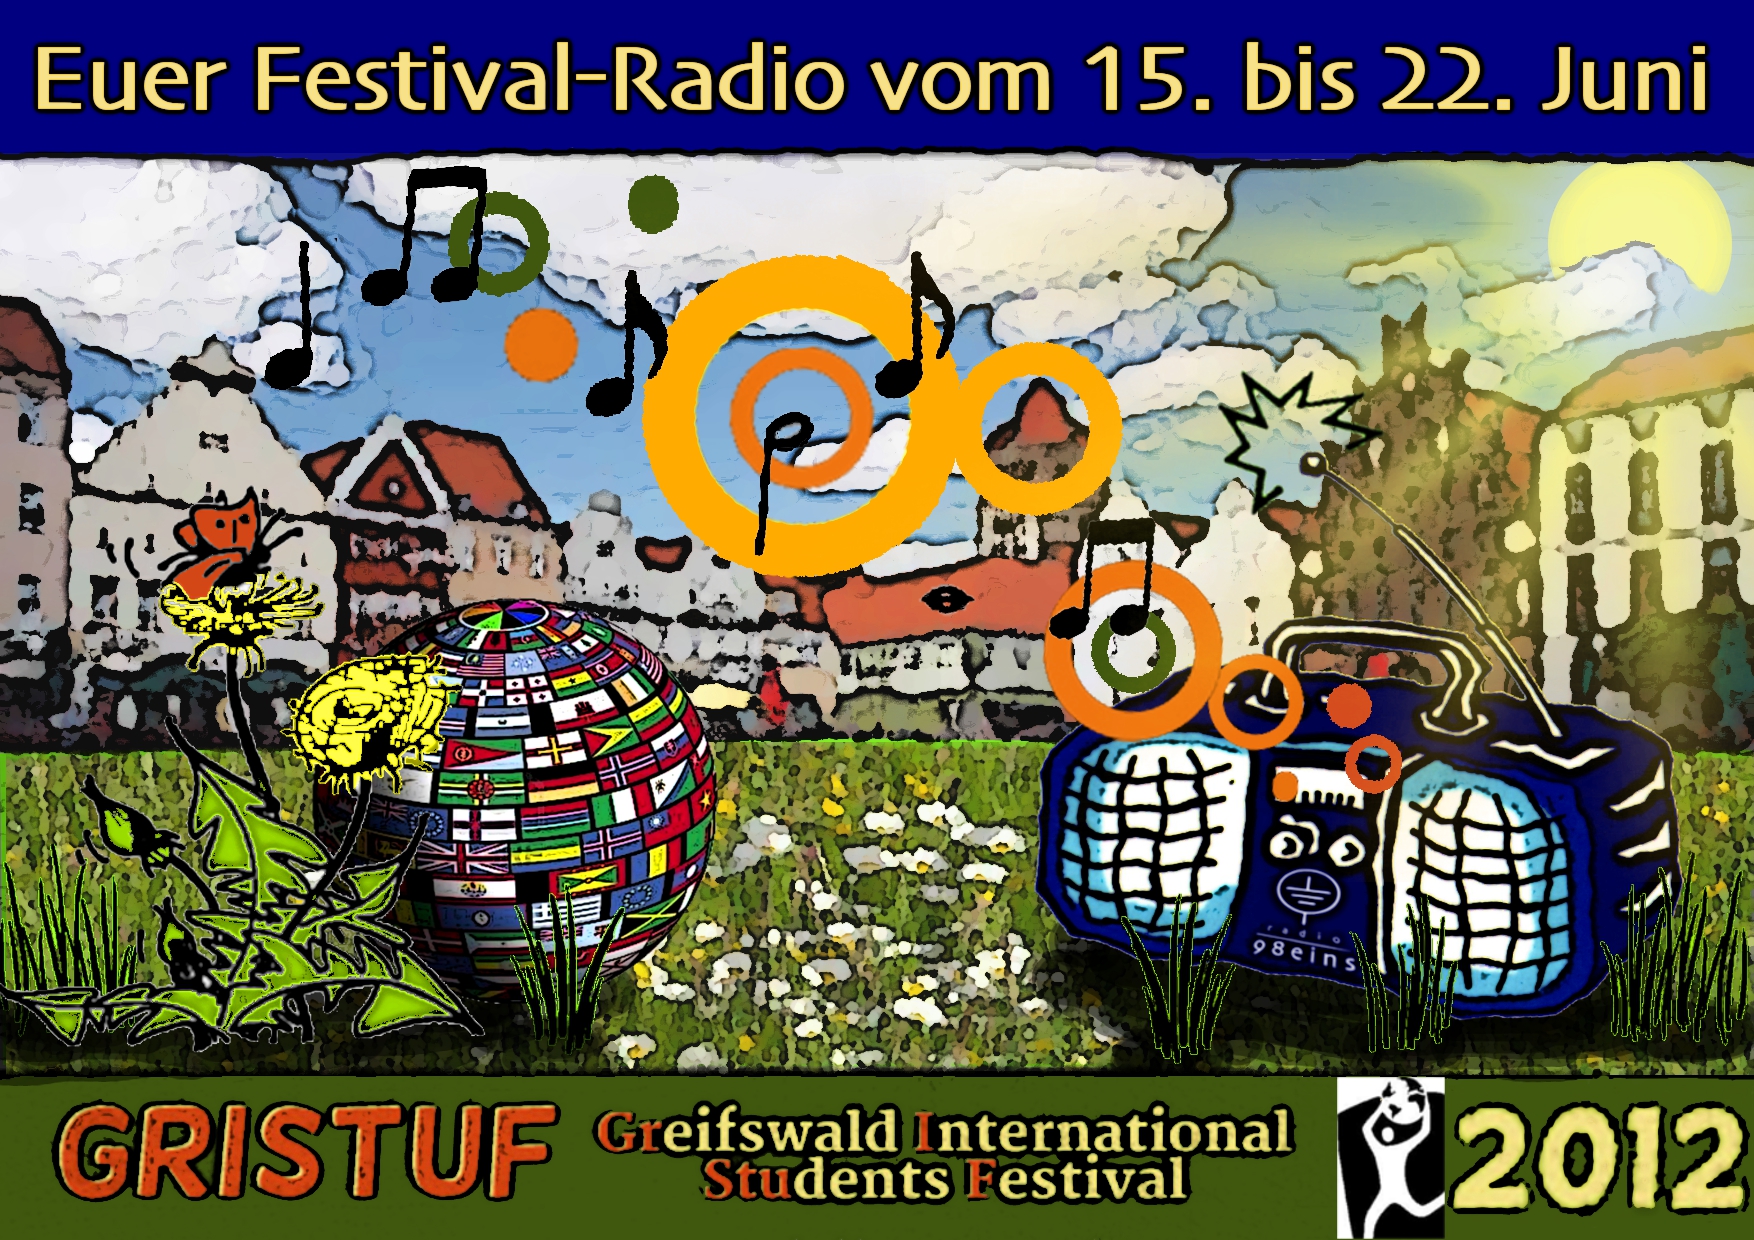 radio 98eins – Euer Festivalradio!